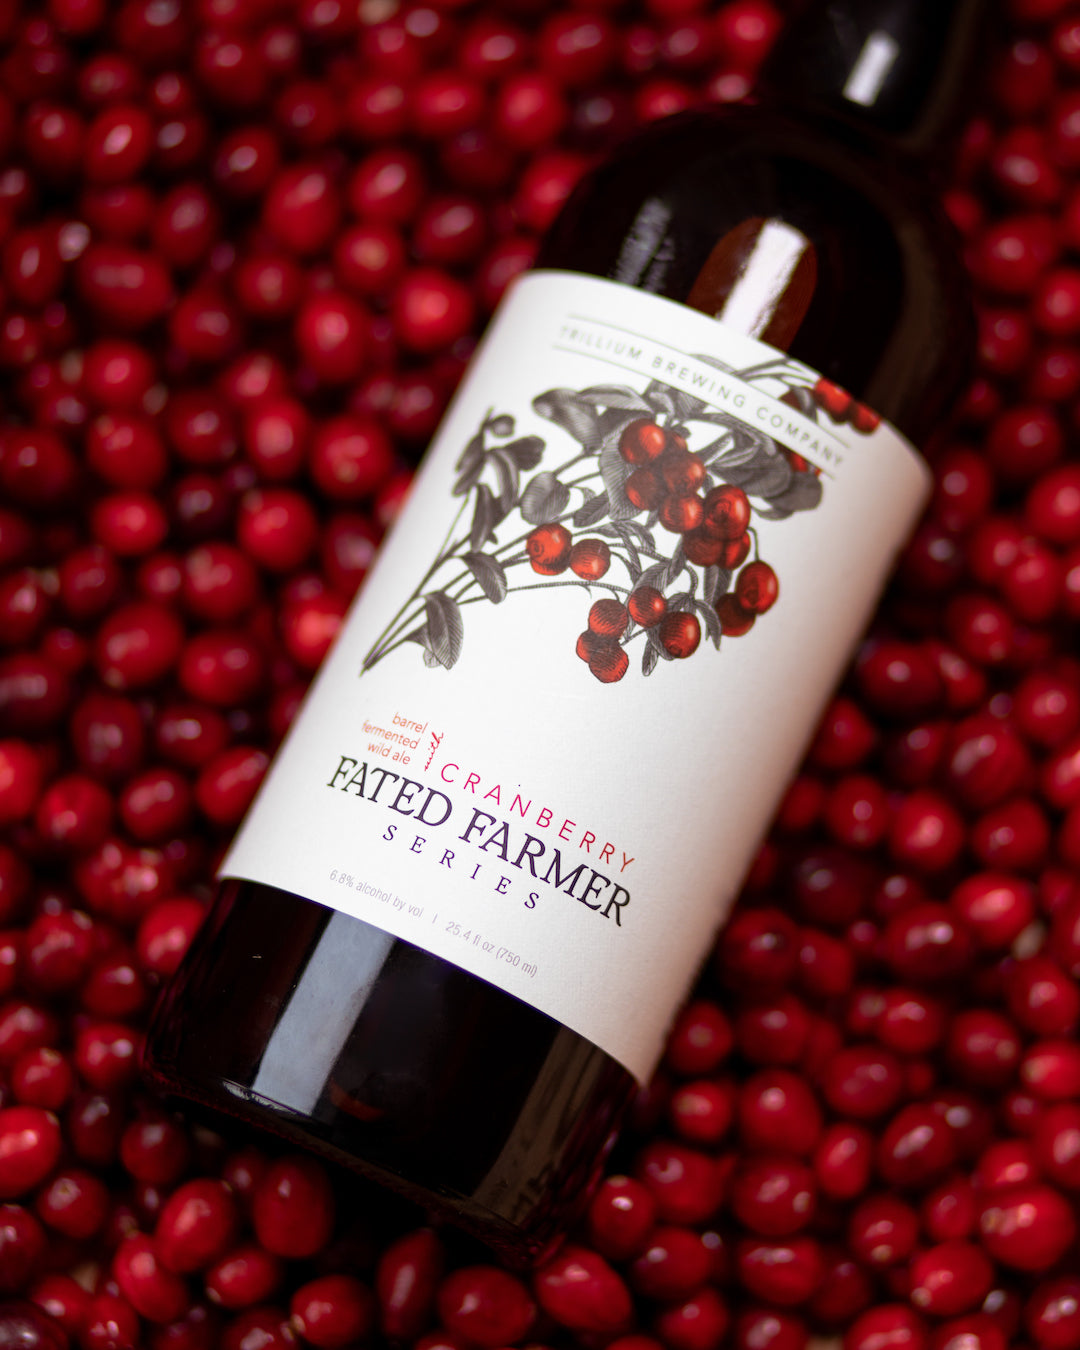 Fated Farmer: Cranberry